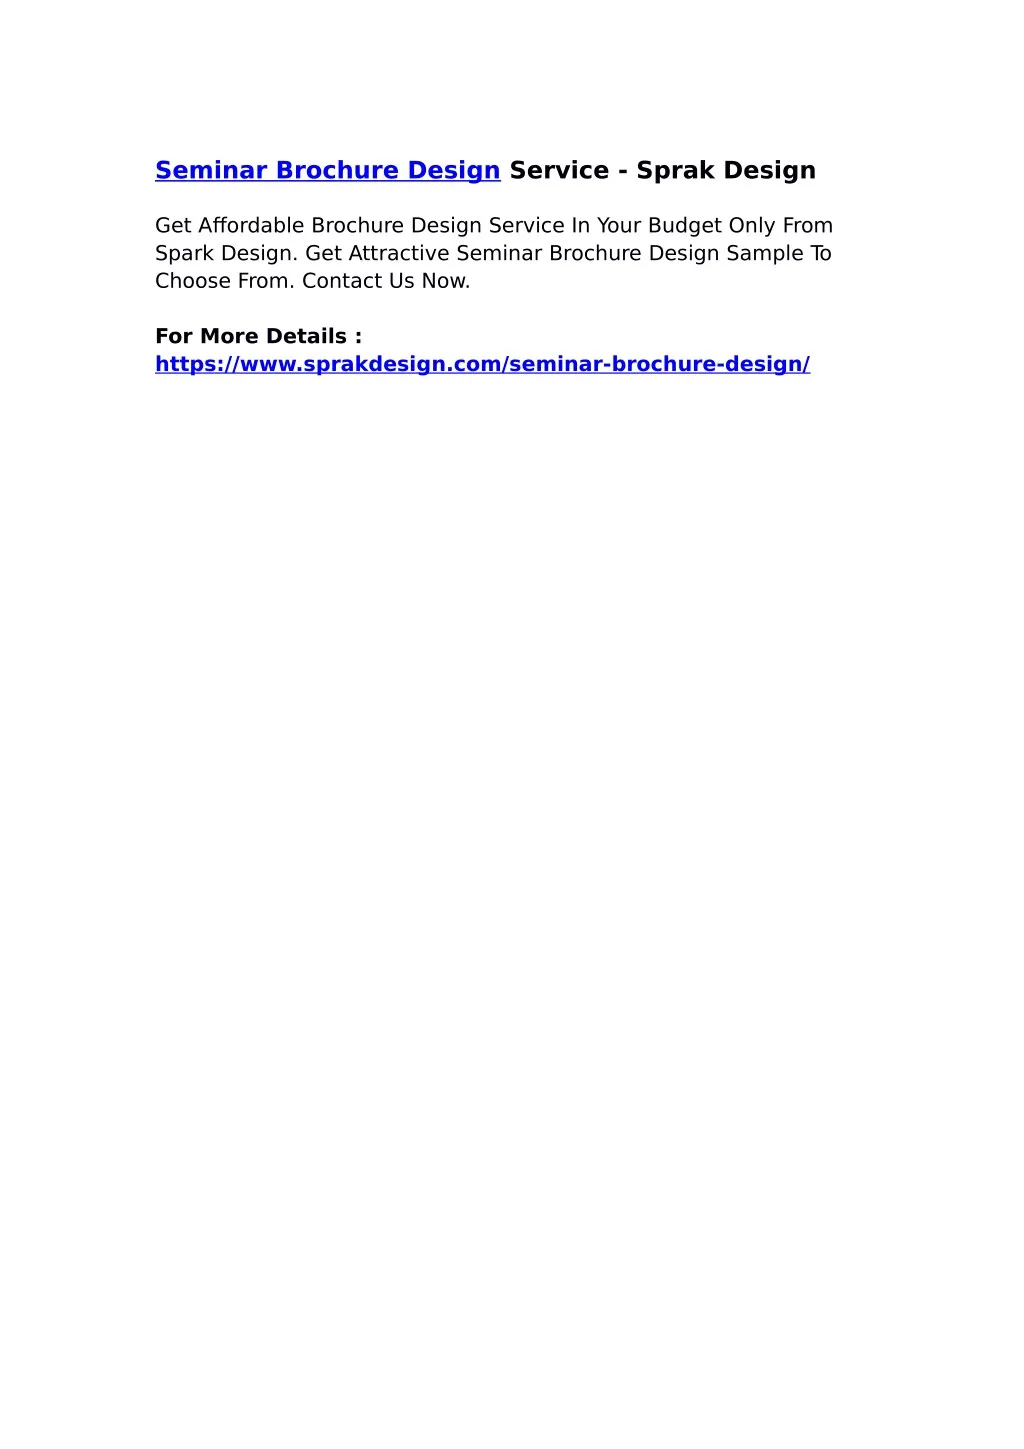 seminar brochure design service sprak design